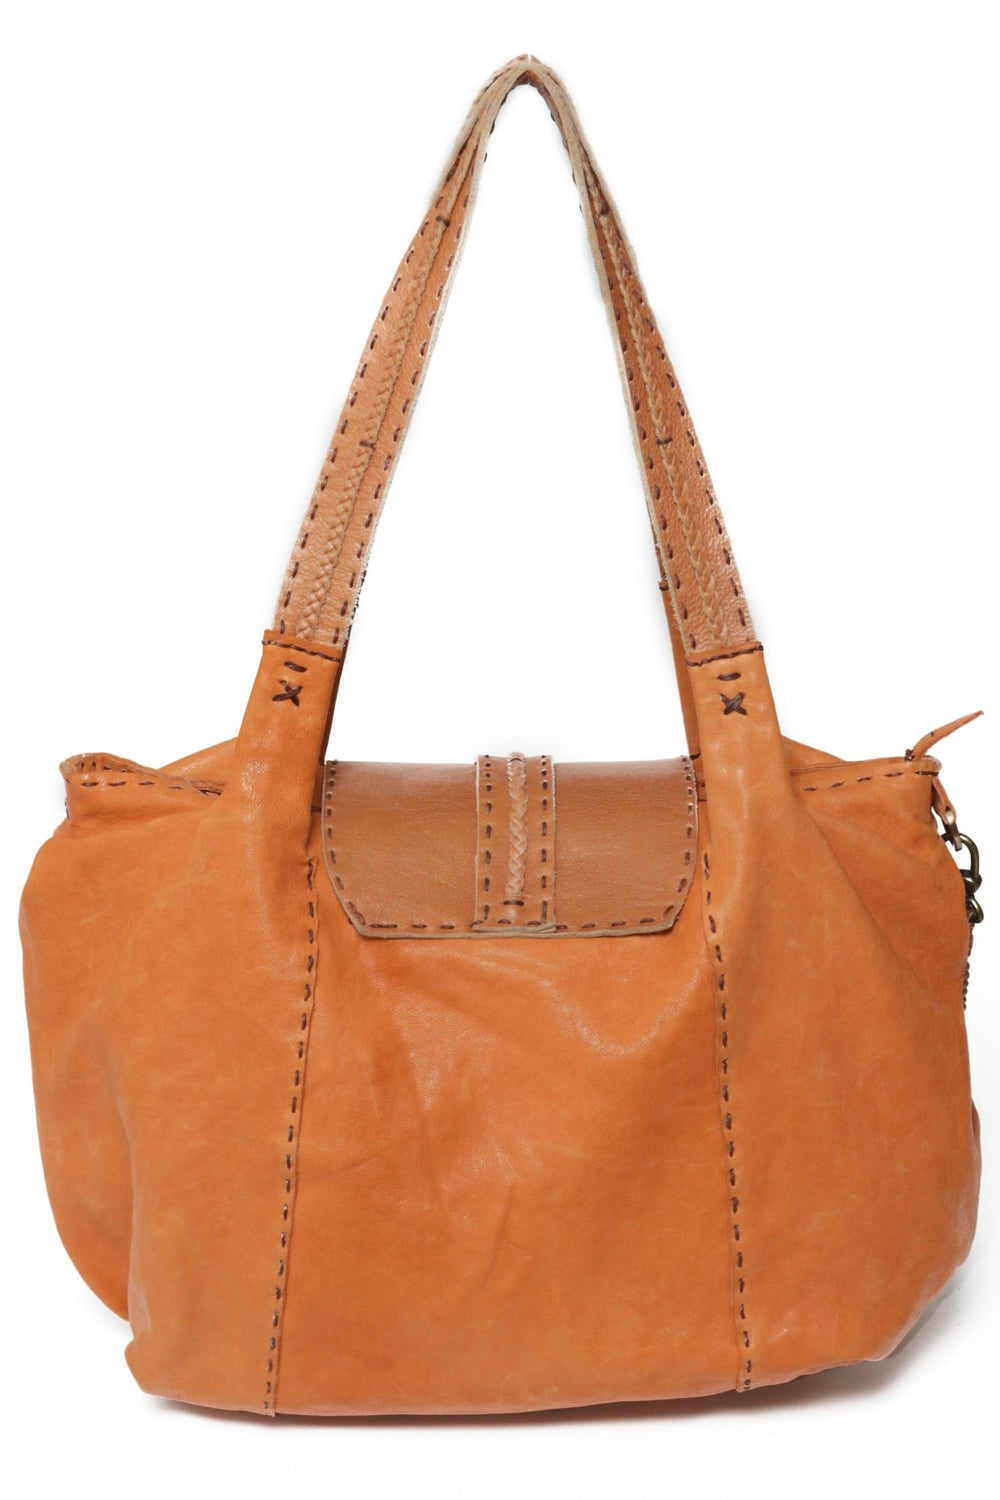 CM712 Orange - Carla Mancini Handbags